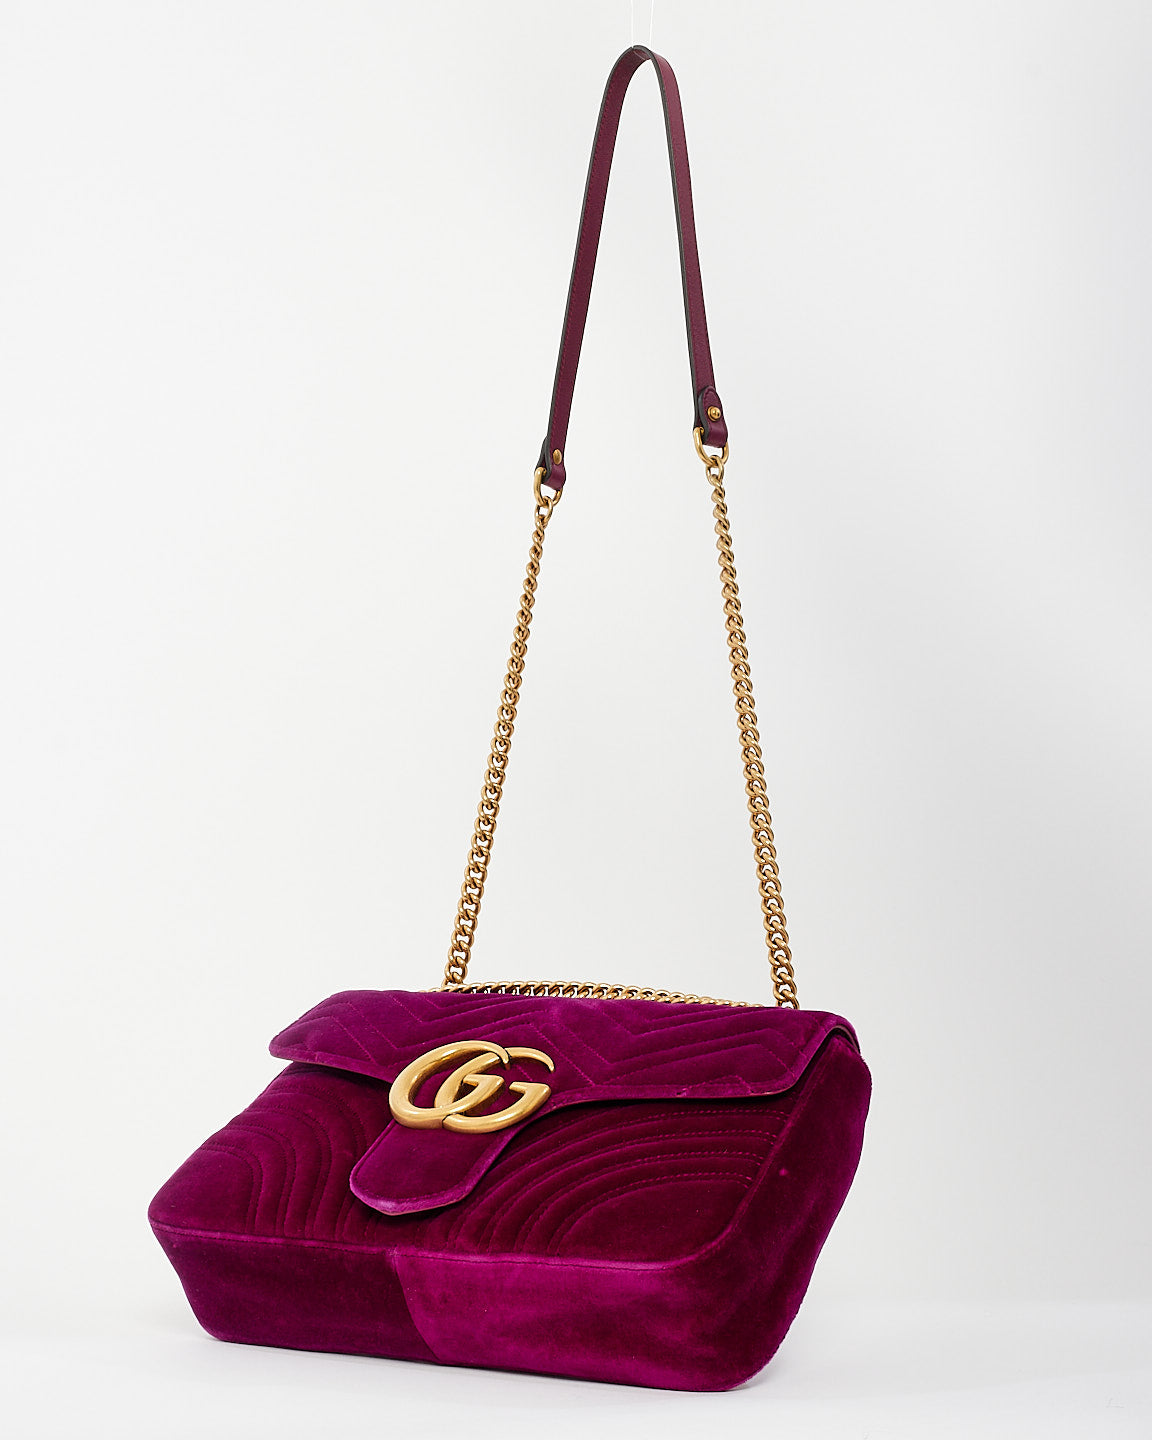 Gucci Fuschia Matelassé Velvet Medium GG Marmont Shoulder Bag